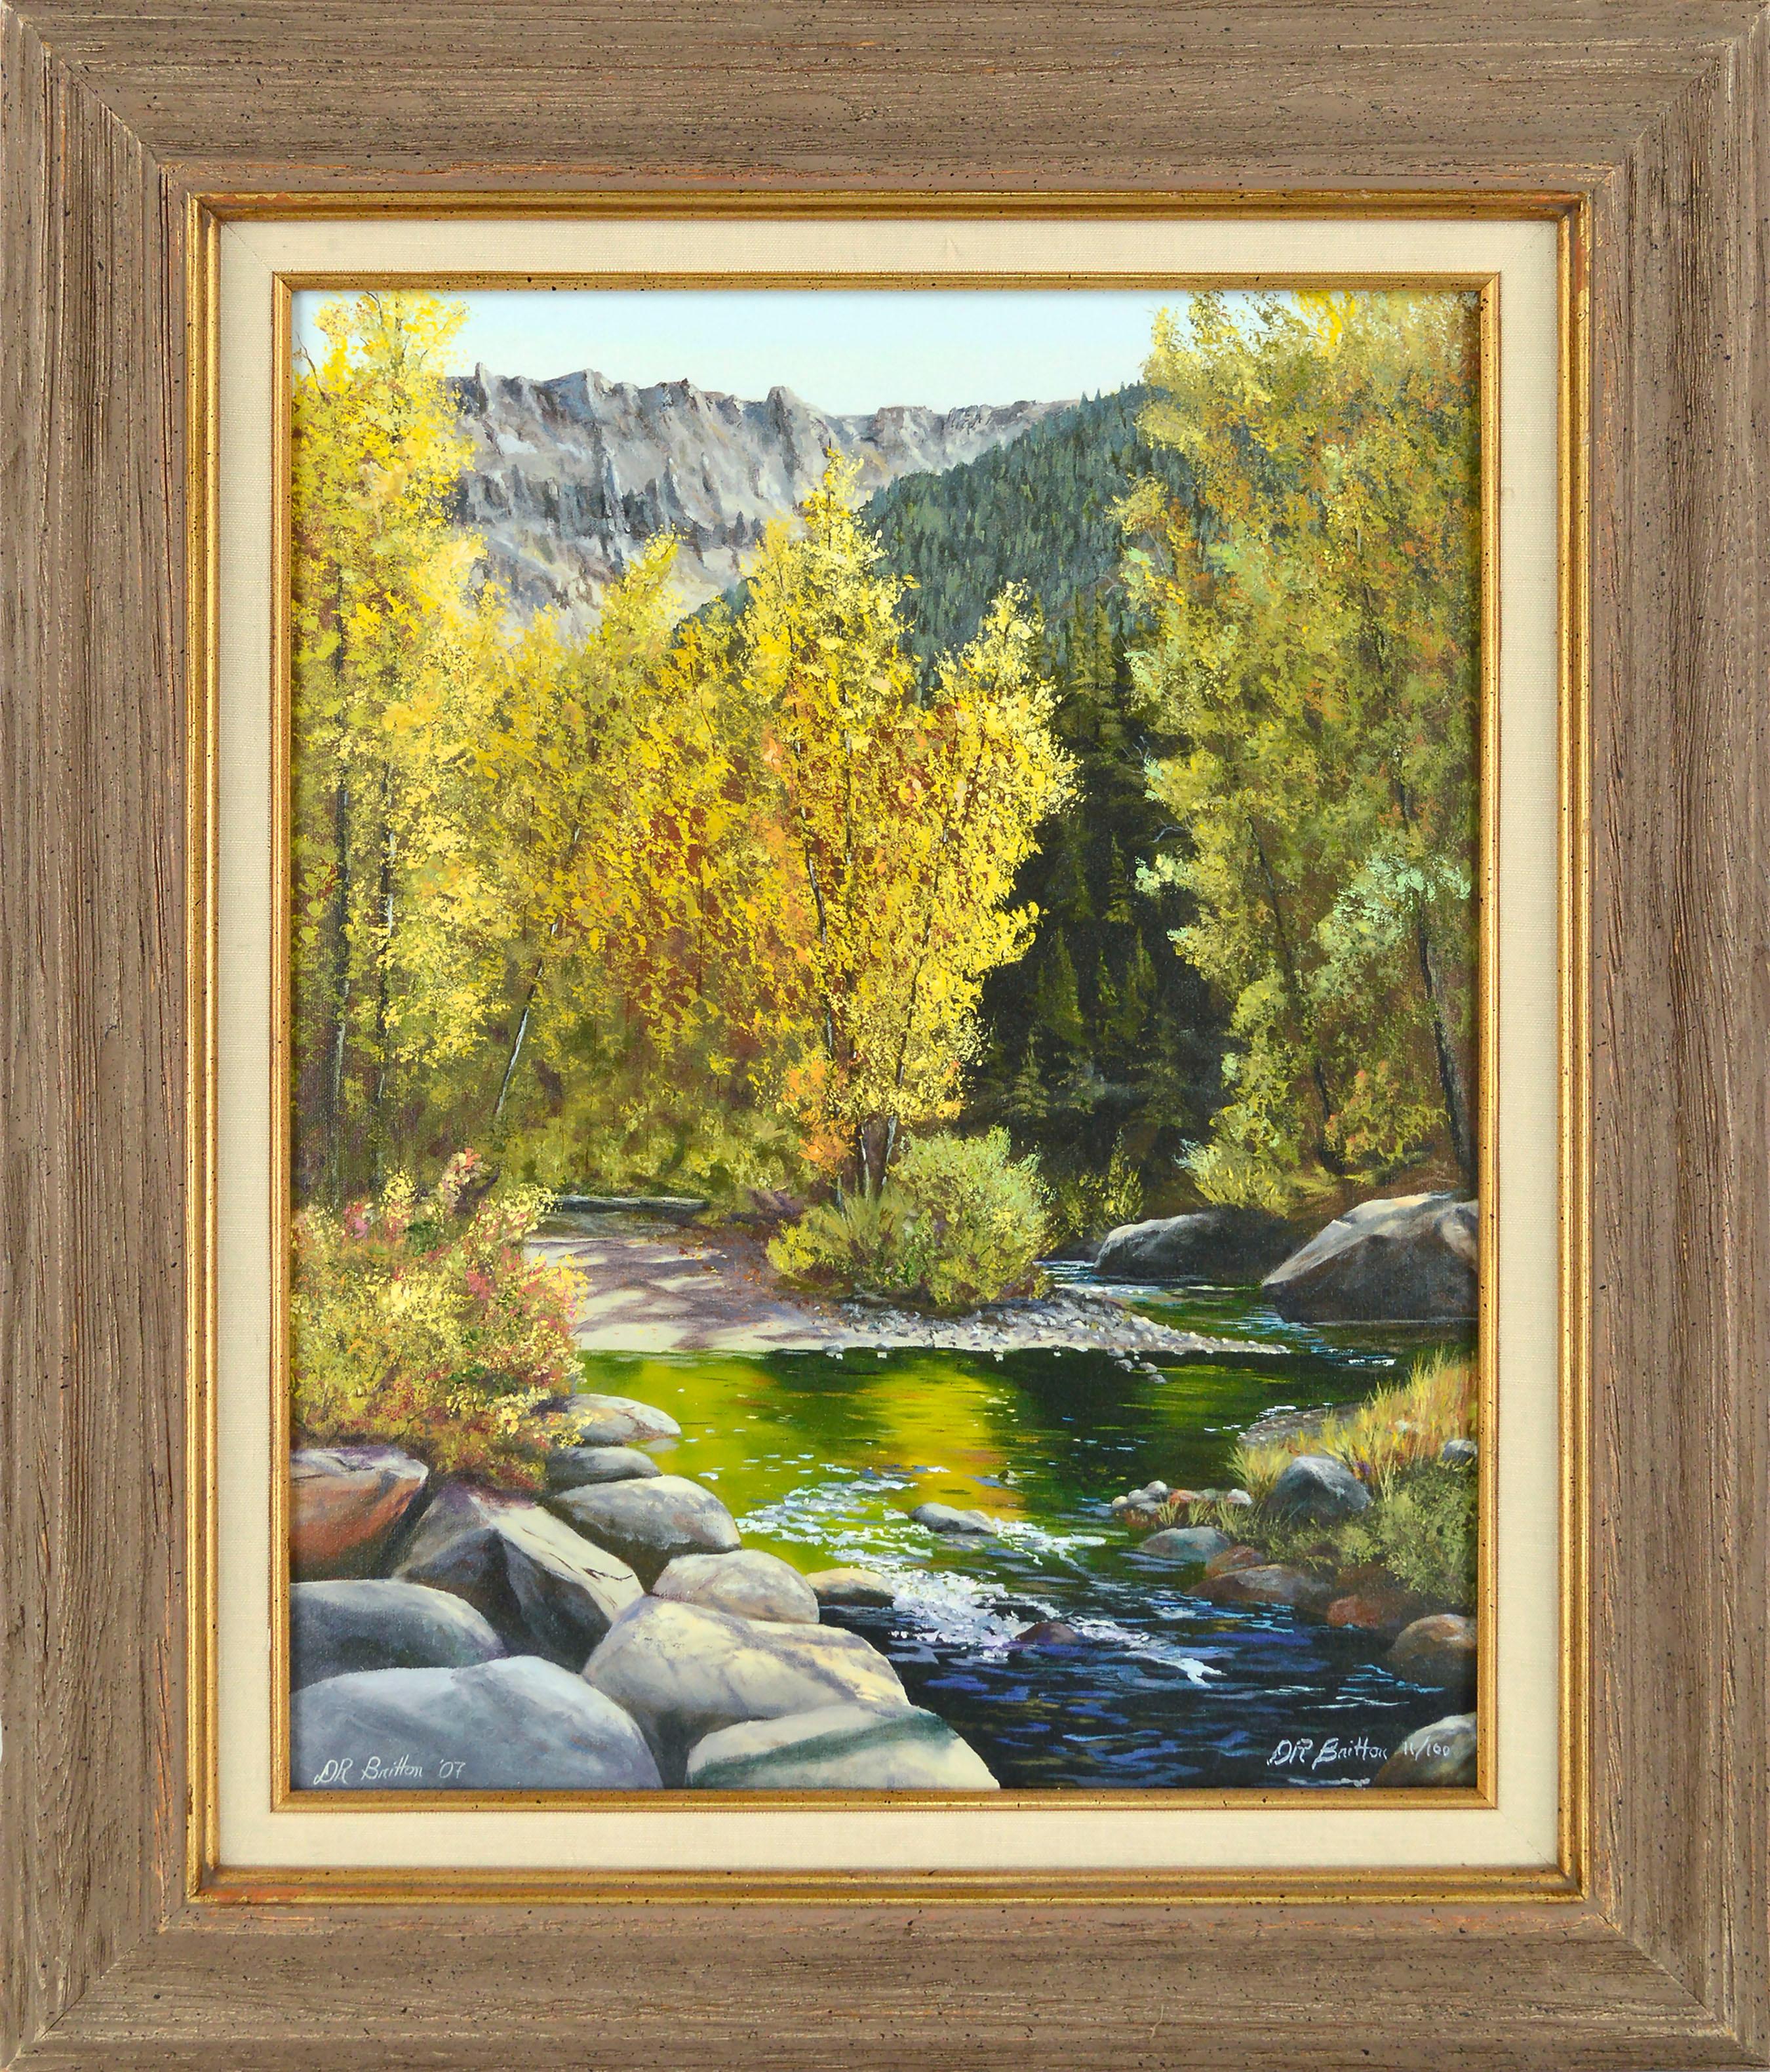 Donald R. Britton Landscape Print - Sierra Mountain Stream in Autumn, Contemporary California Giclée on Canvas